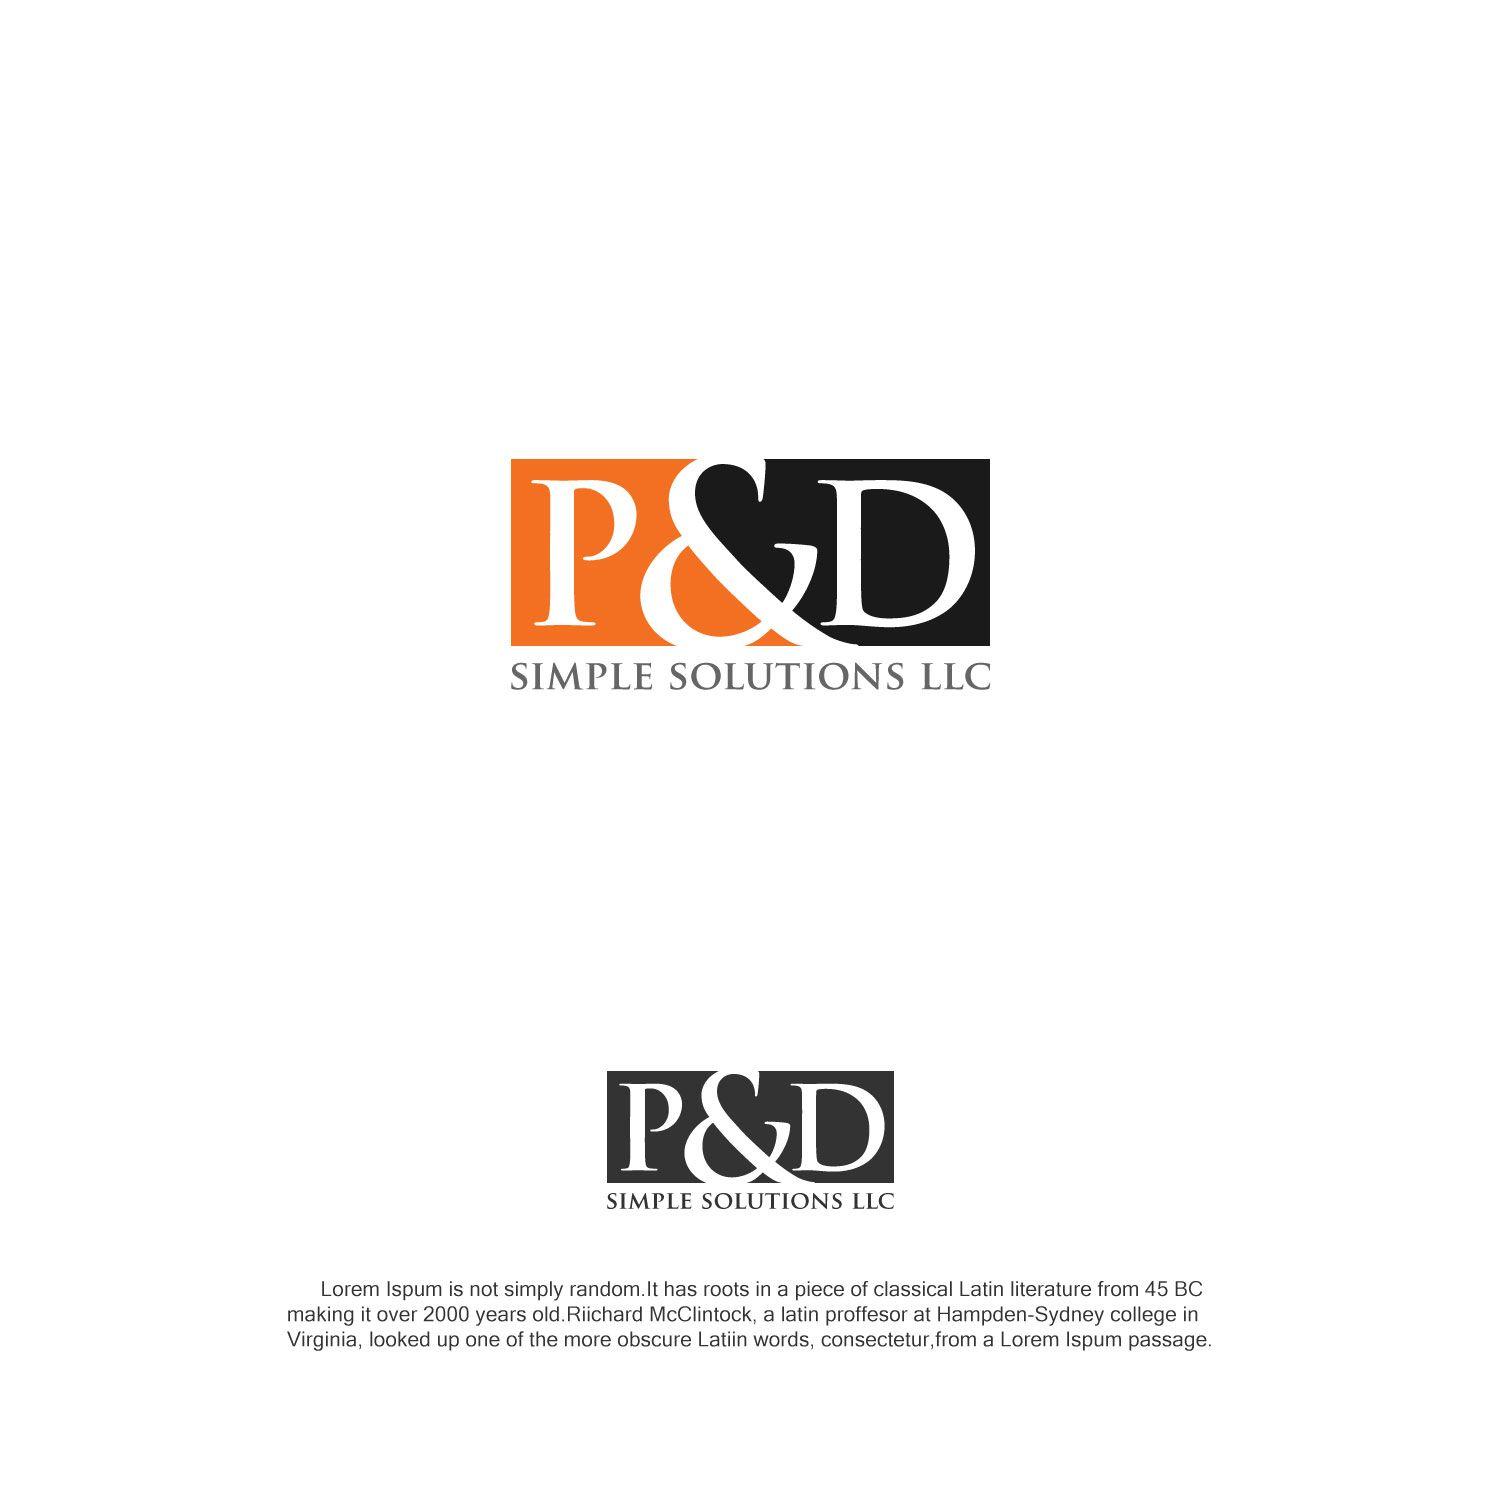 Simple Business Logo - Modern, Playful, Business Logo Design for P&D Simple Solutions LLC ...